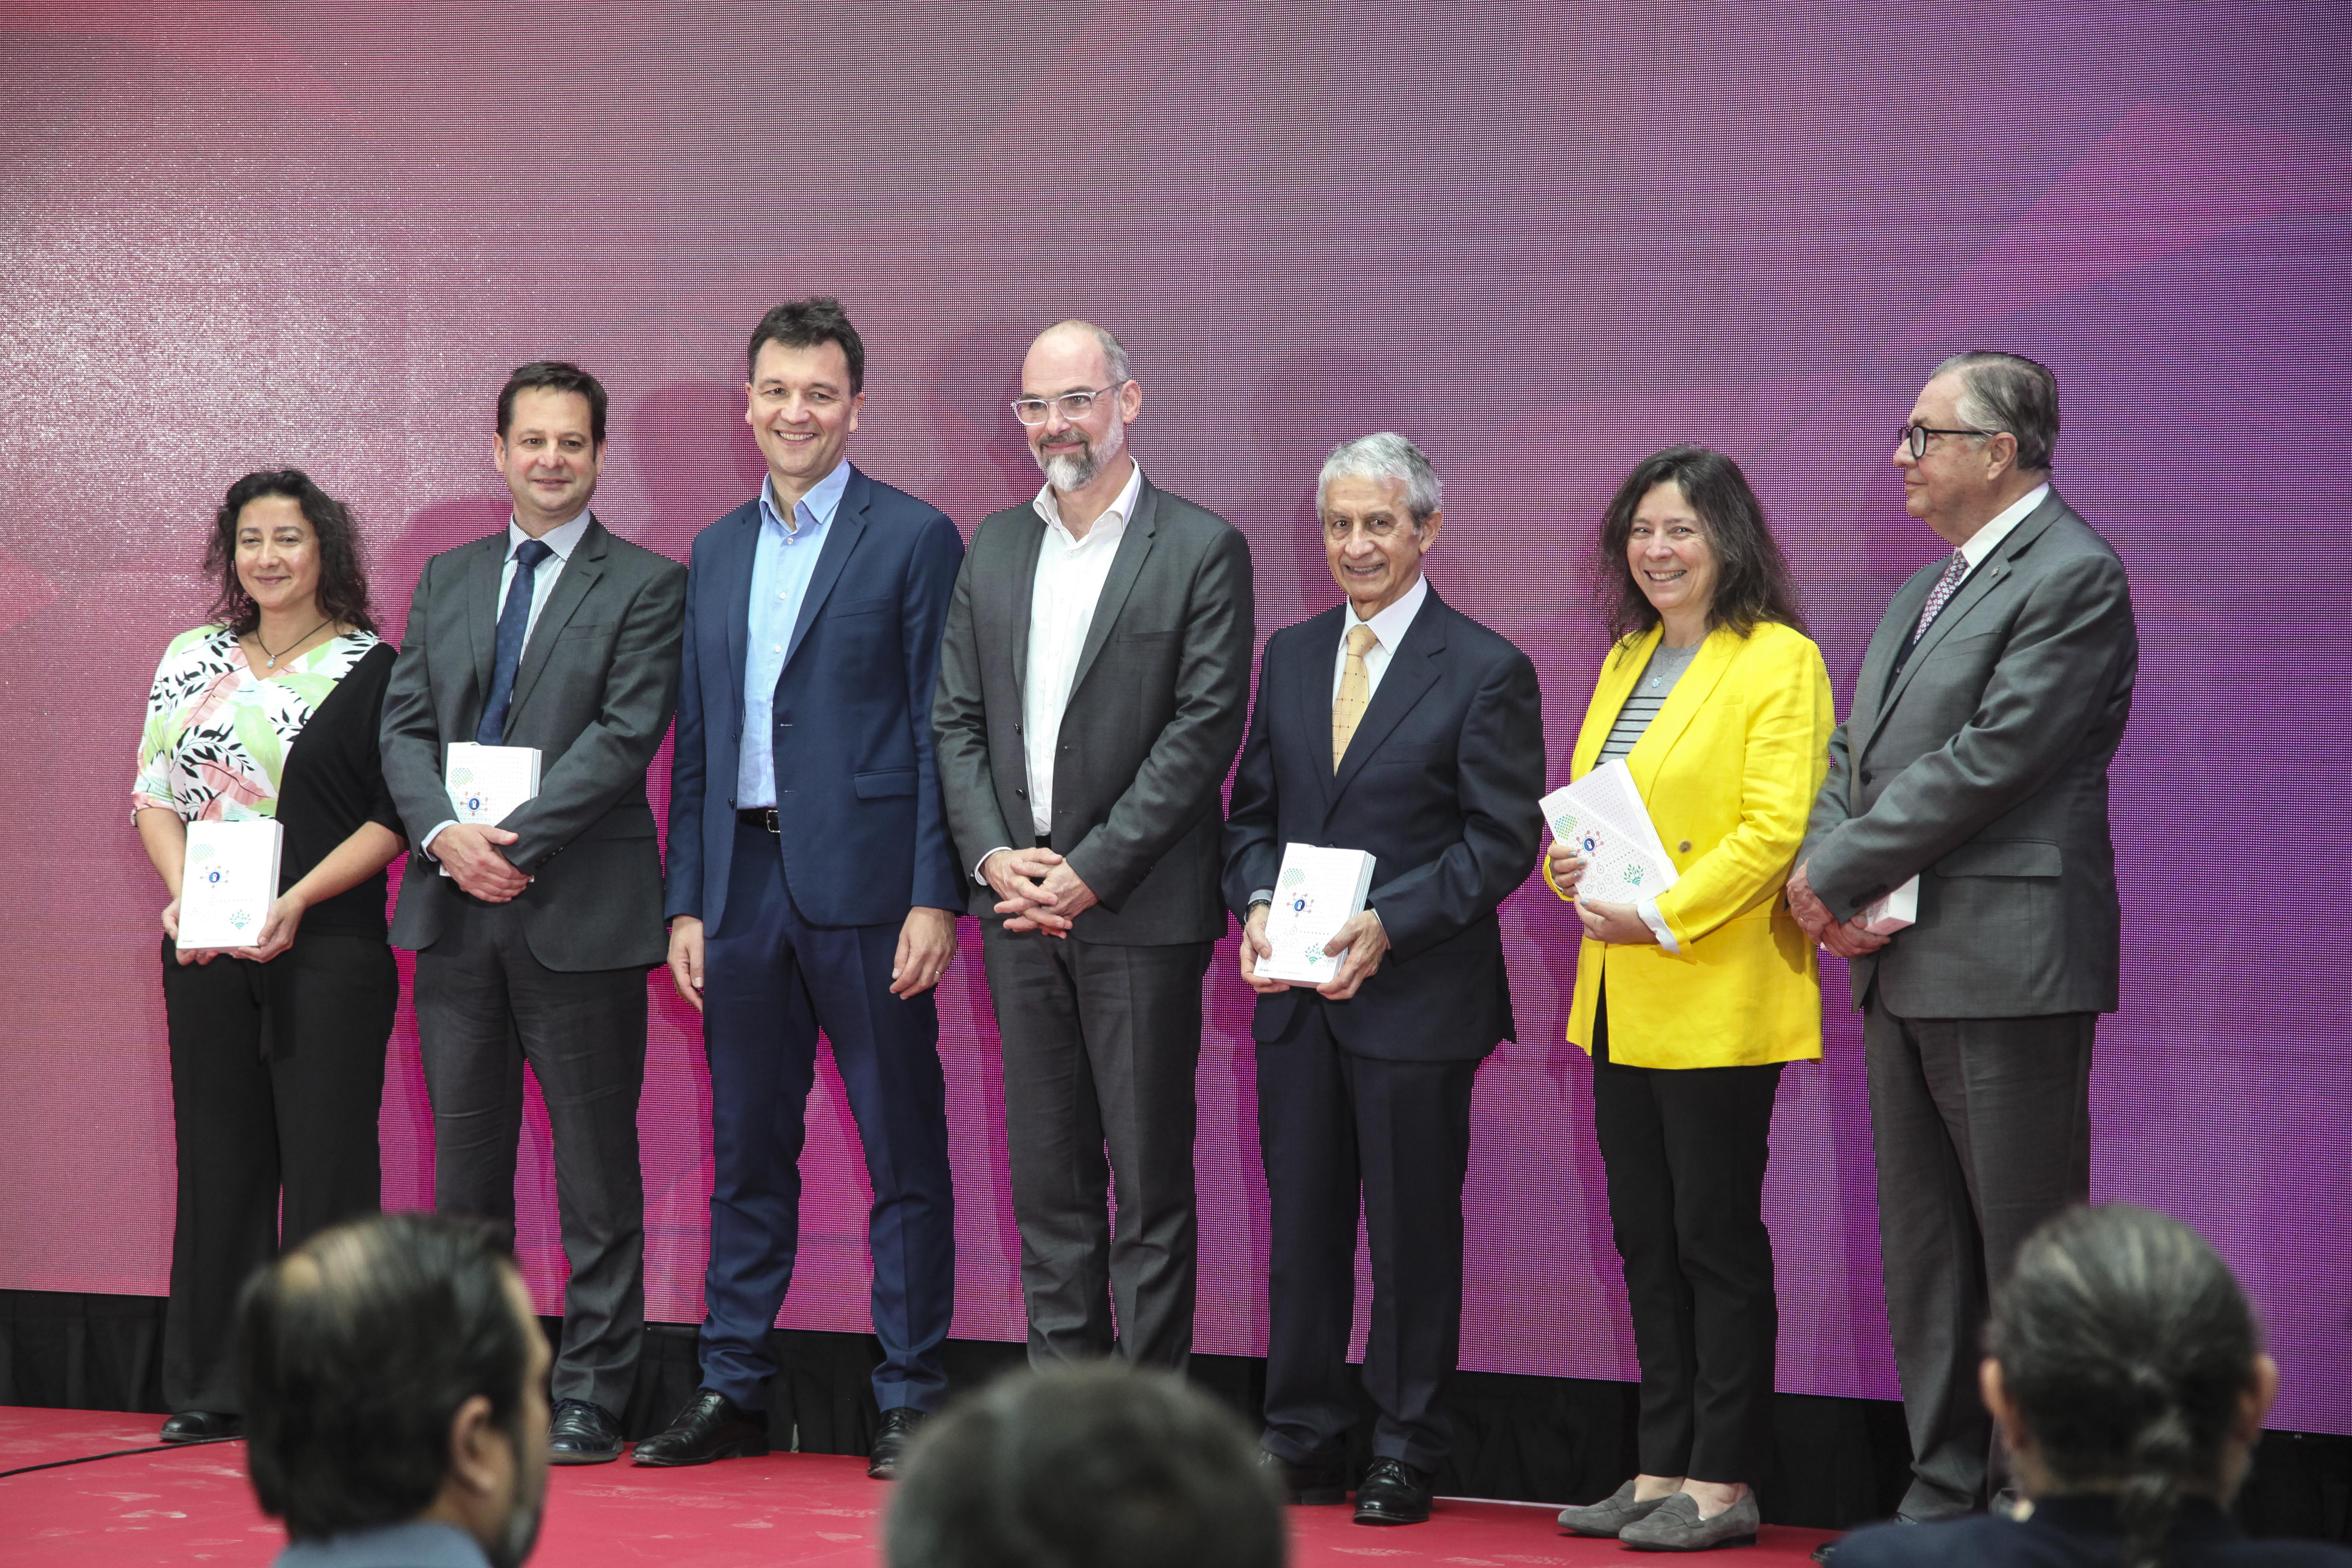 Representantes de universidades chilenas reciben libros blancos de Inria Chile.